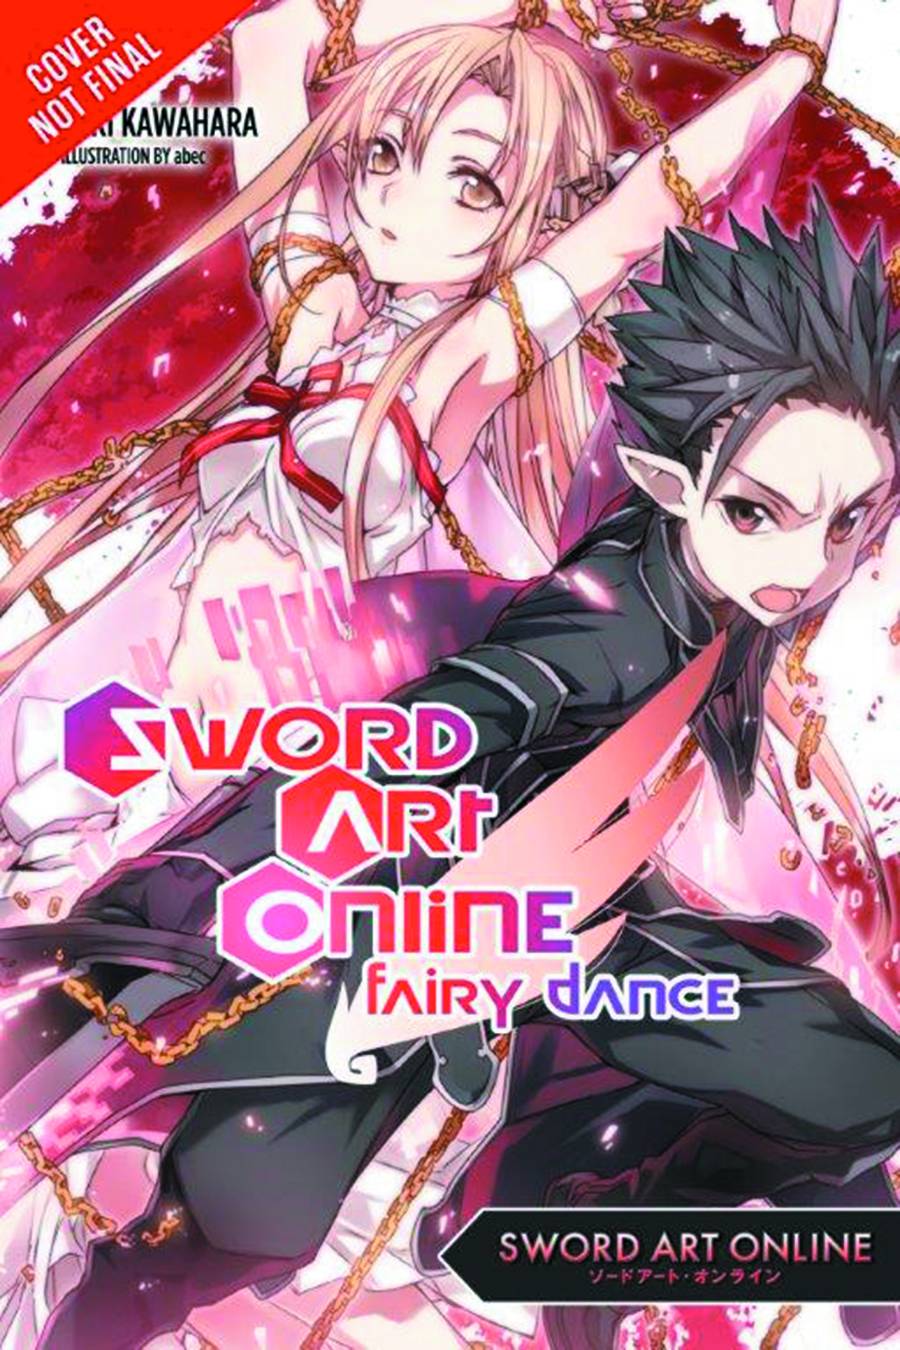 Sword Art Online: Progressive, Vol. 4 by Reki Kawahara